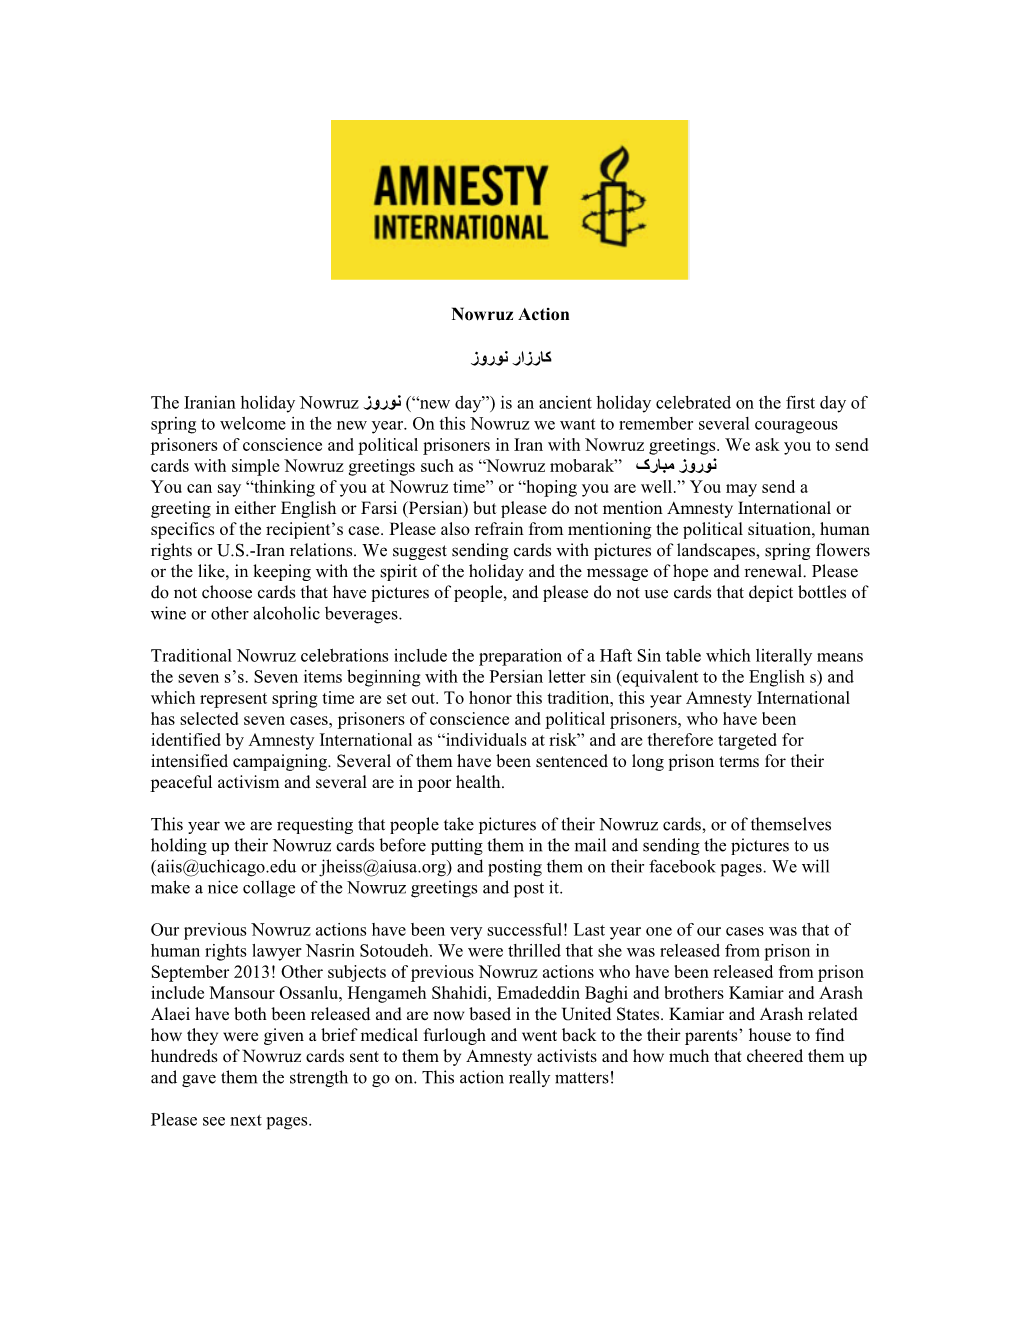 Amnesty International USA Nowruz Action